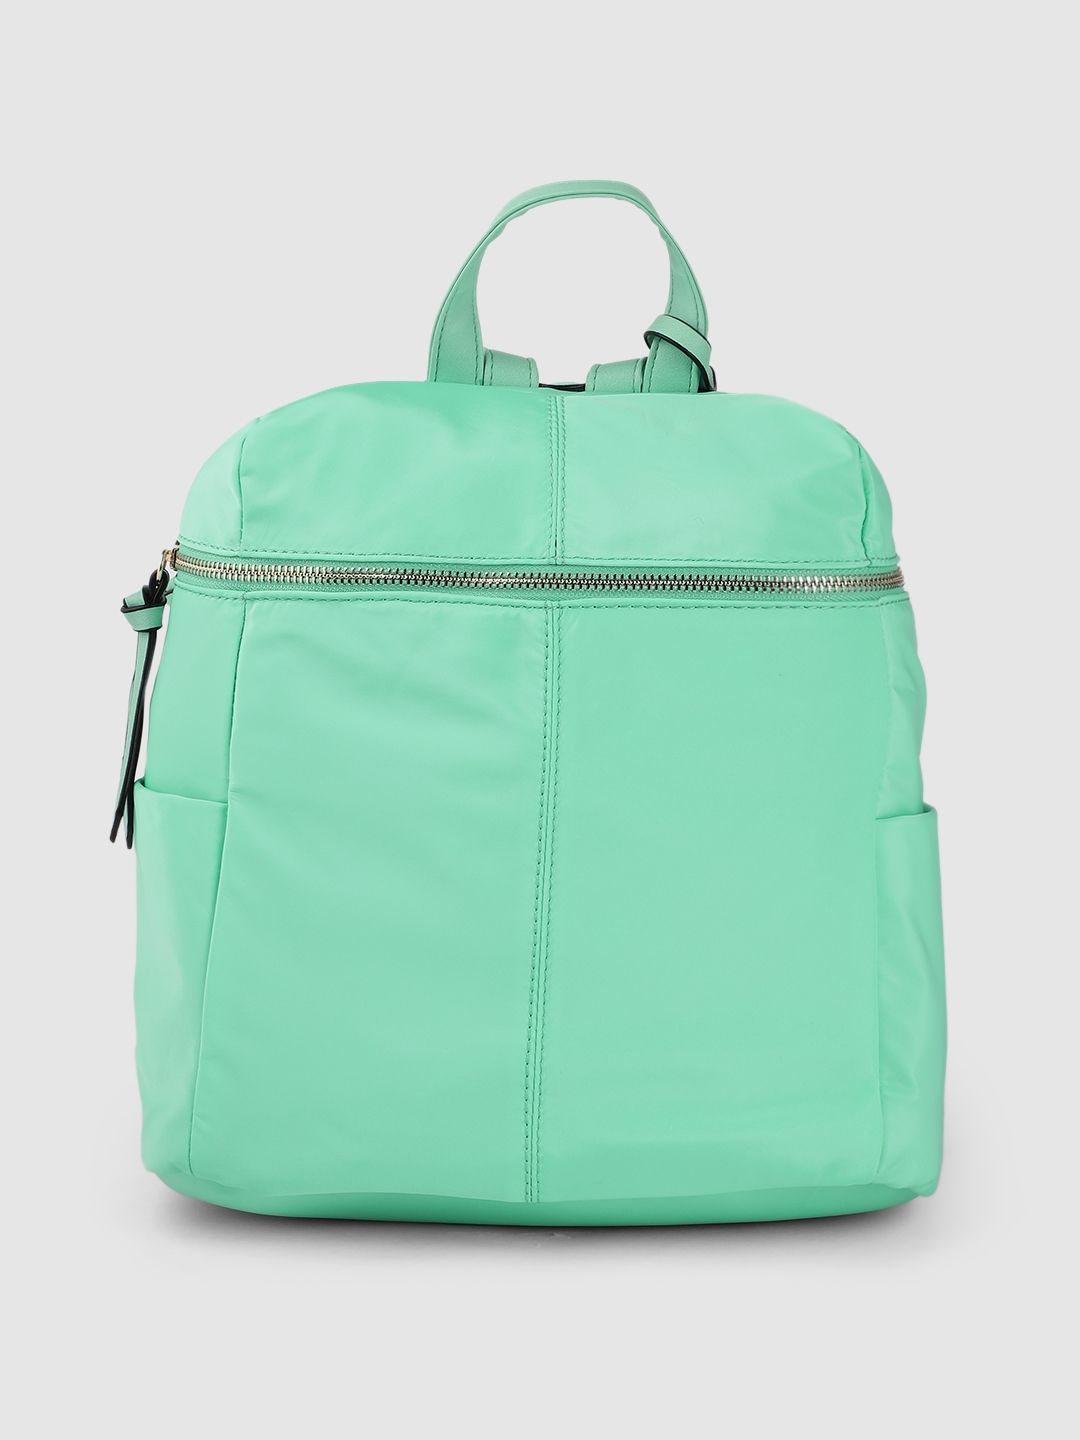 Allen Solly Women Green Tasselled Backpack Price in India